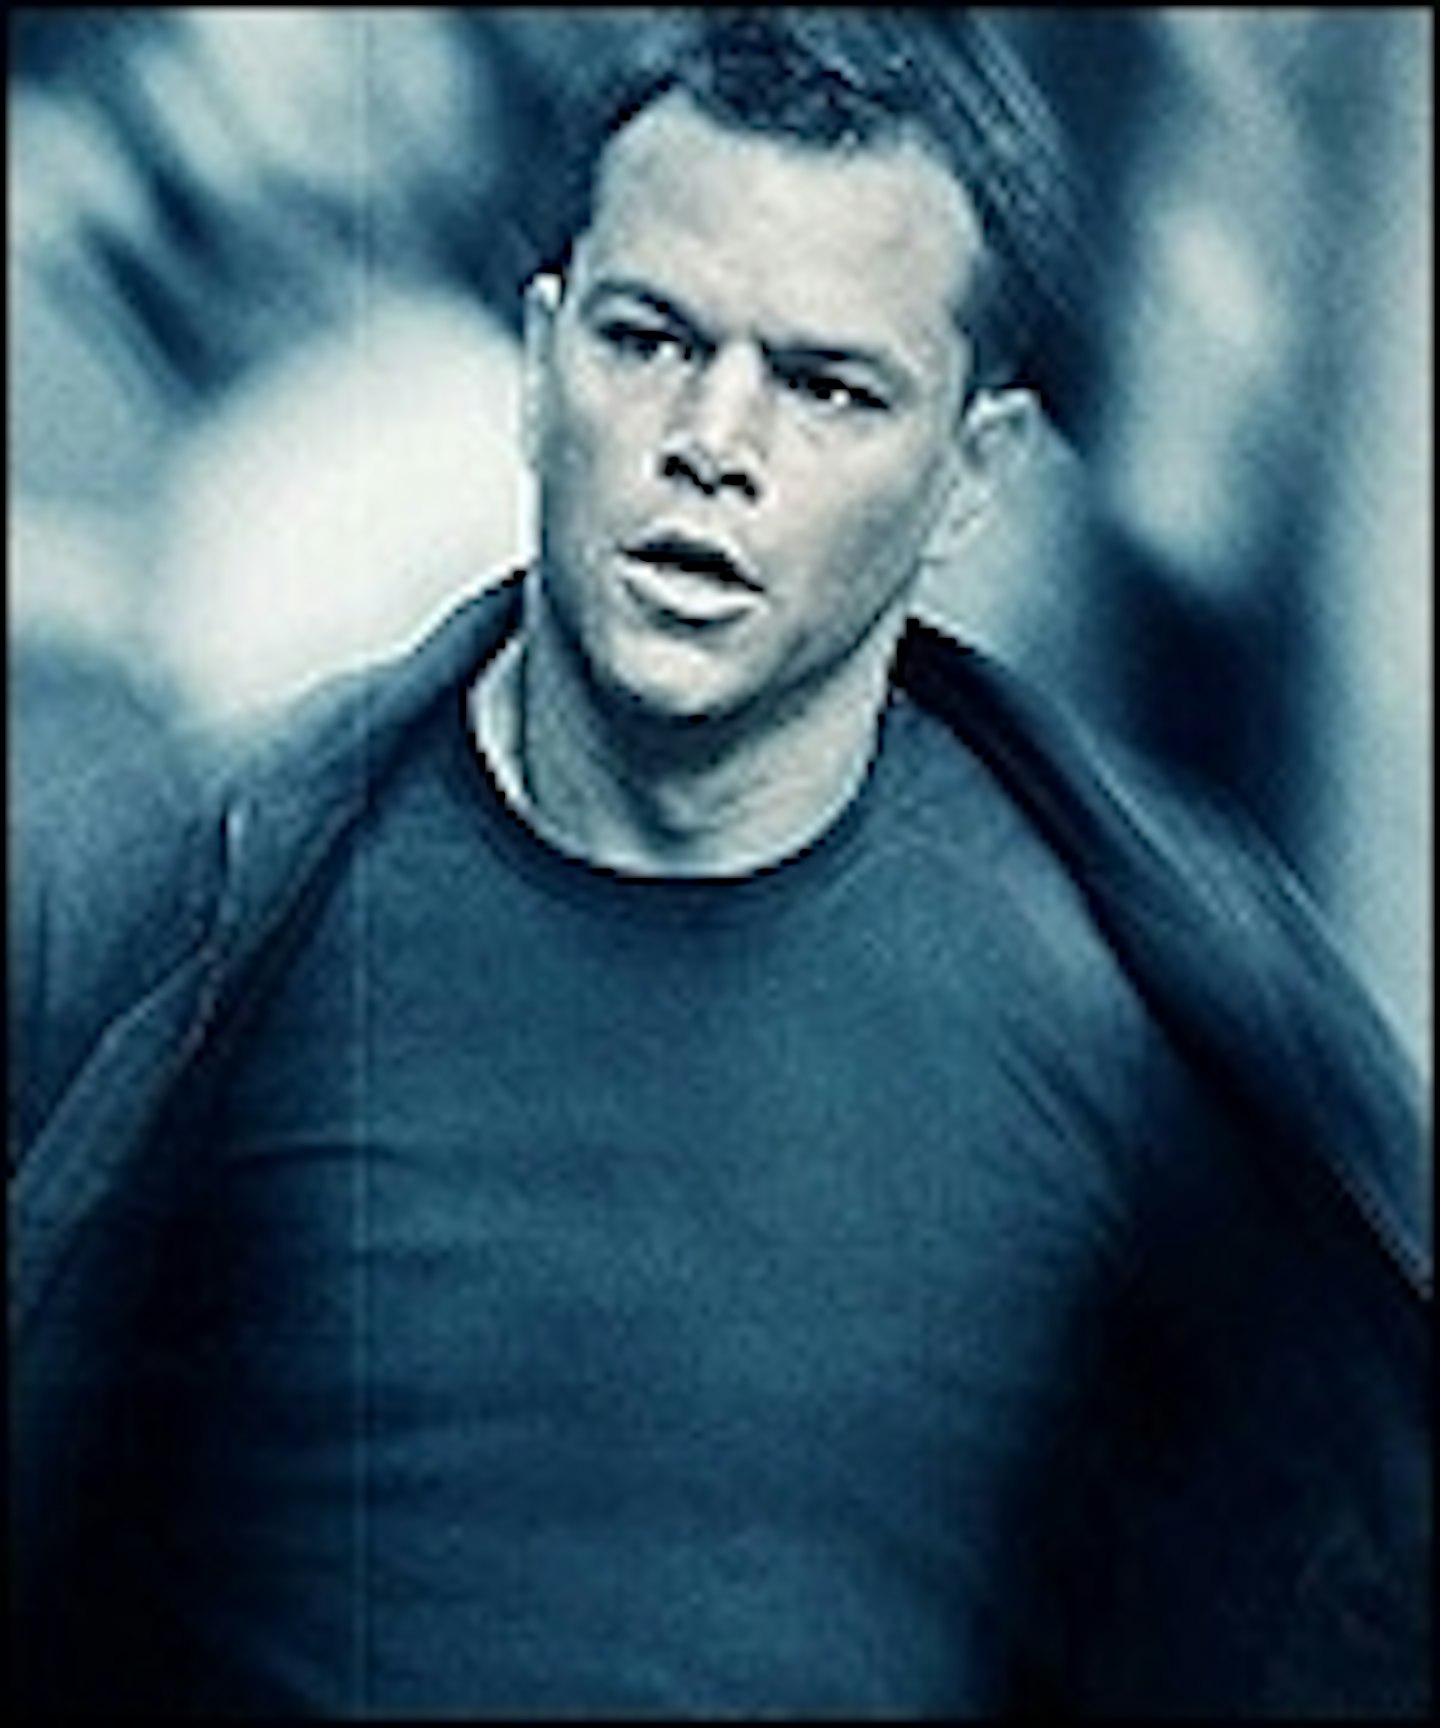 Bourne 4 Gets Writer